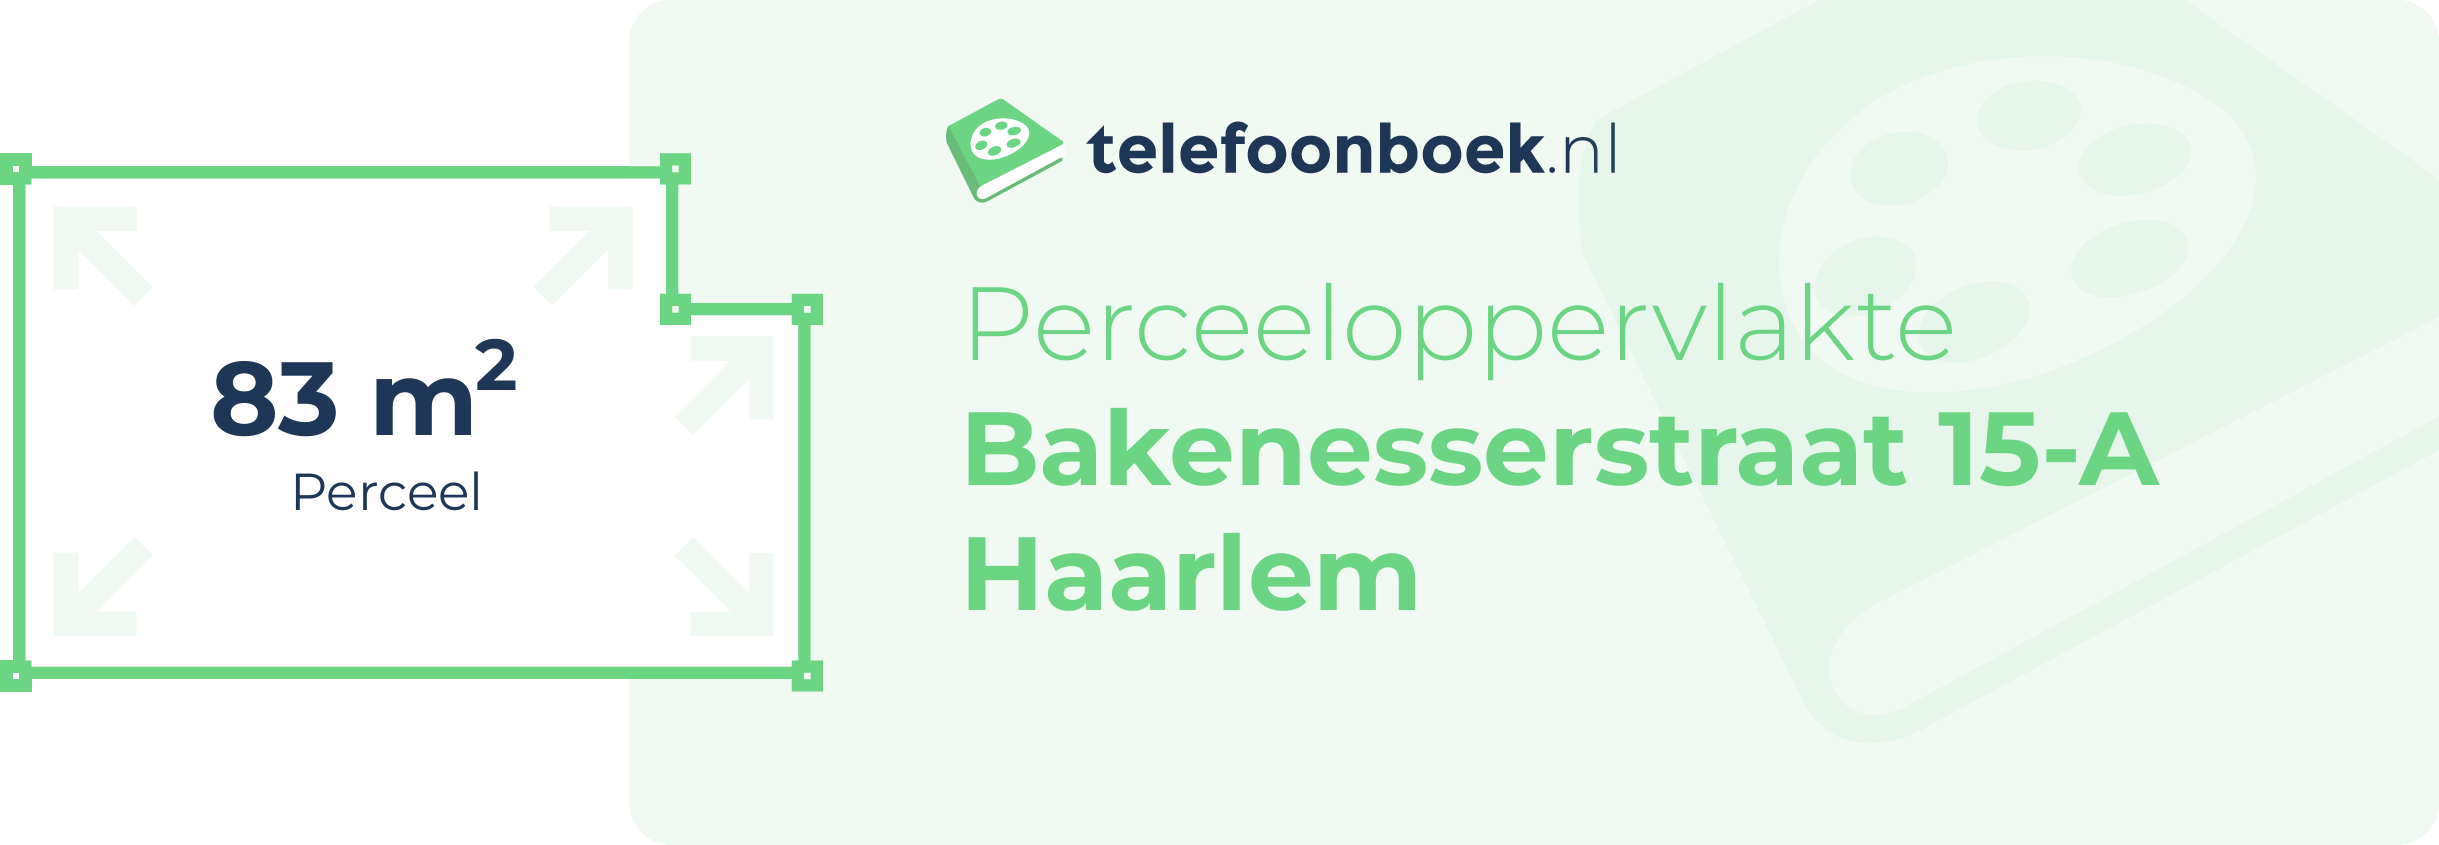 Perceeloppervlakte Bakenesserstraat 15-A Haarlem